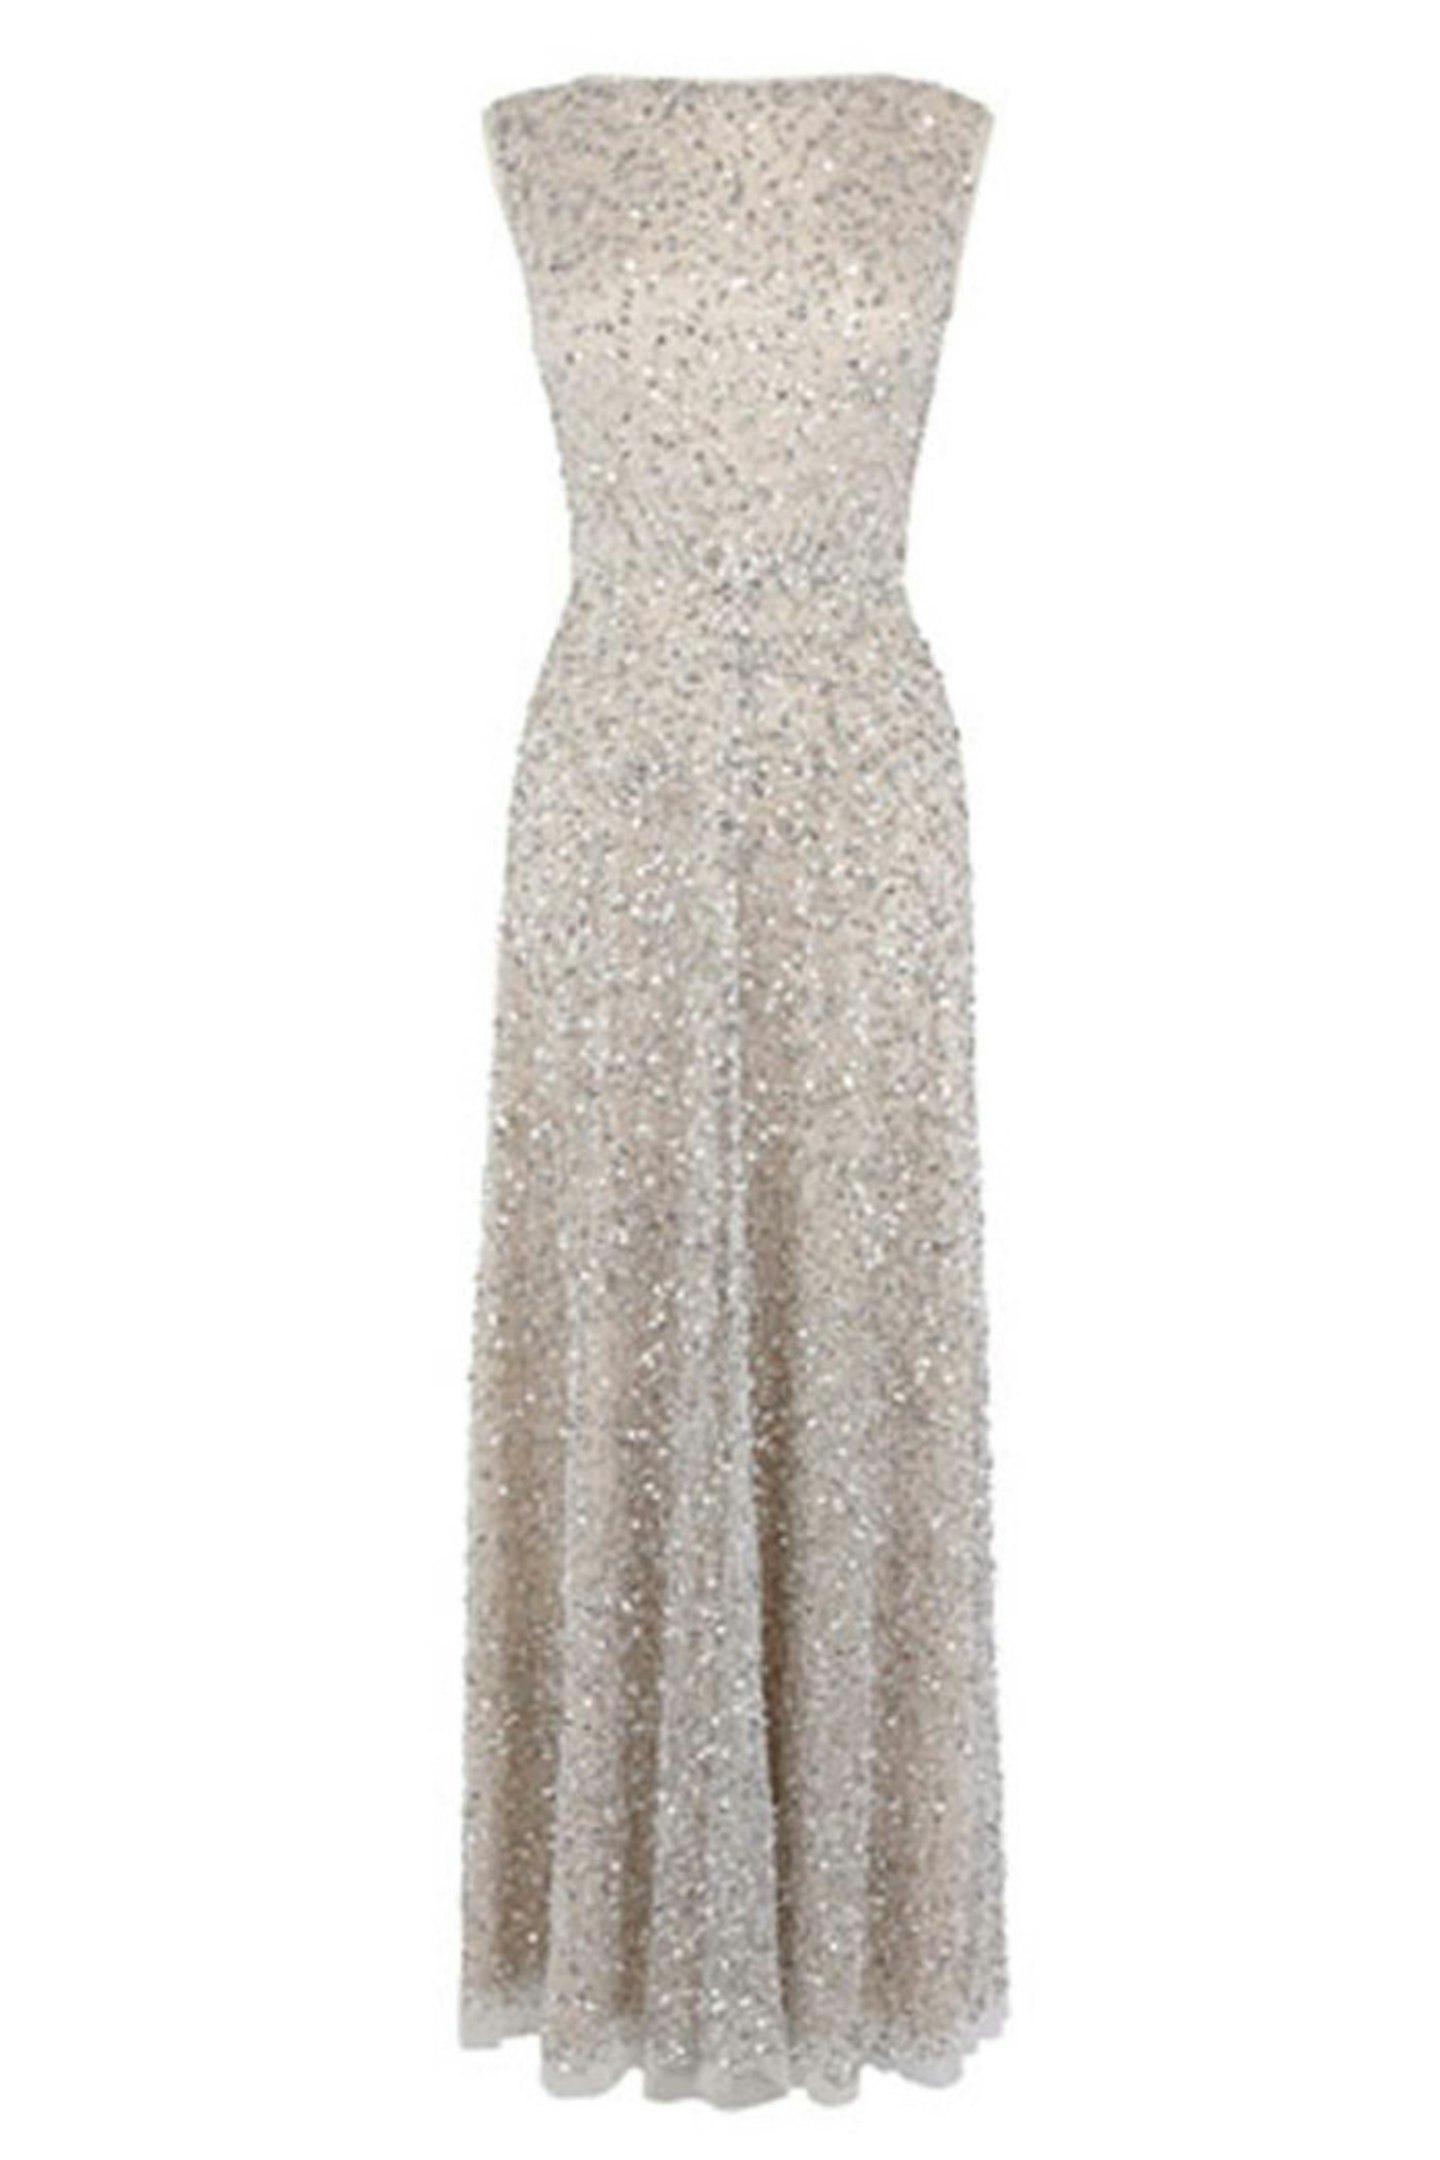 Demure cream maxi evening dress with silver sequin detail, £350, Coast